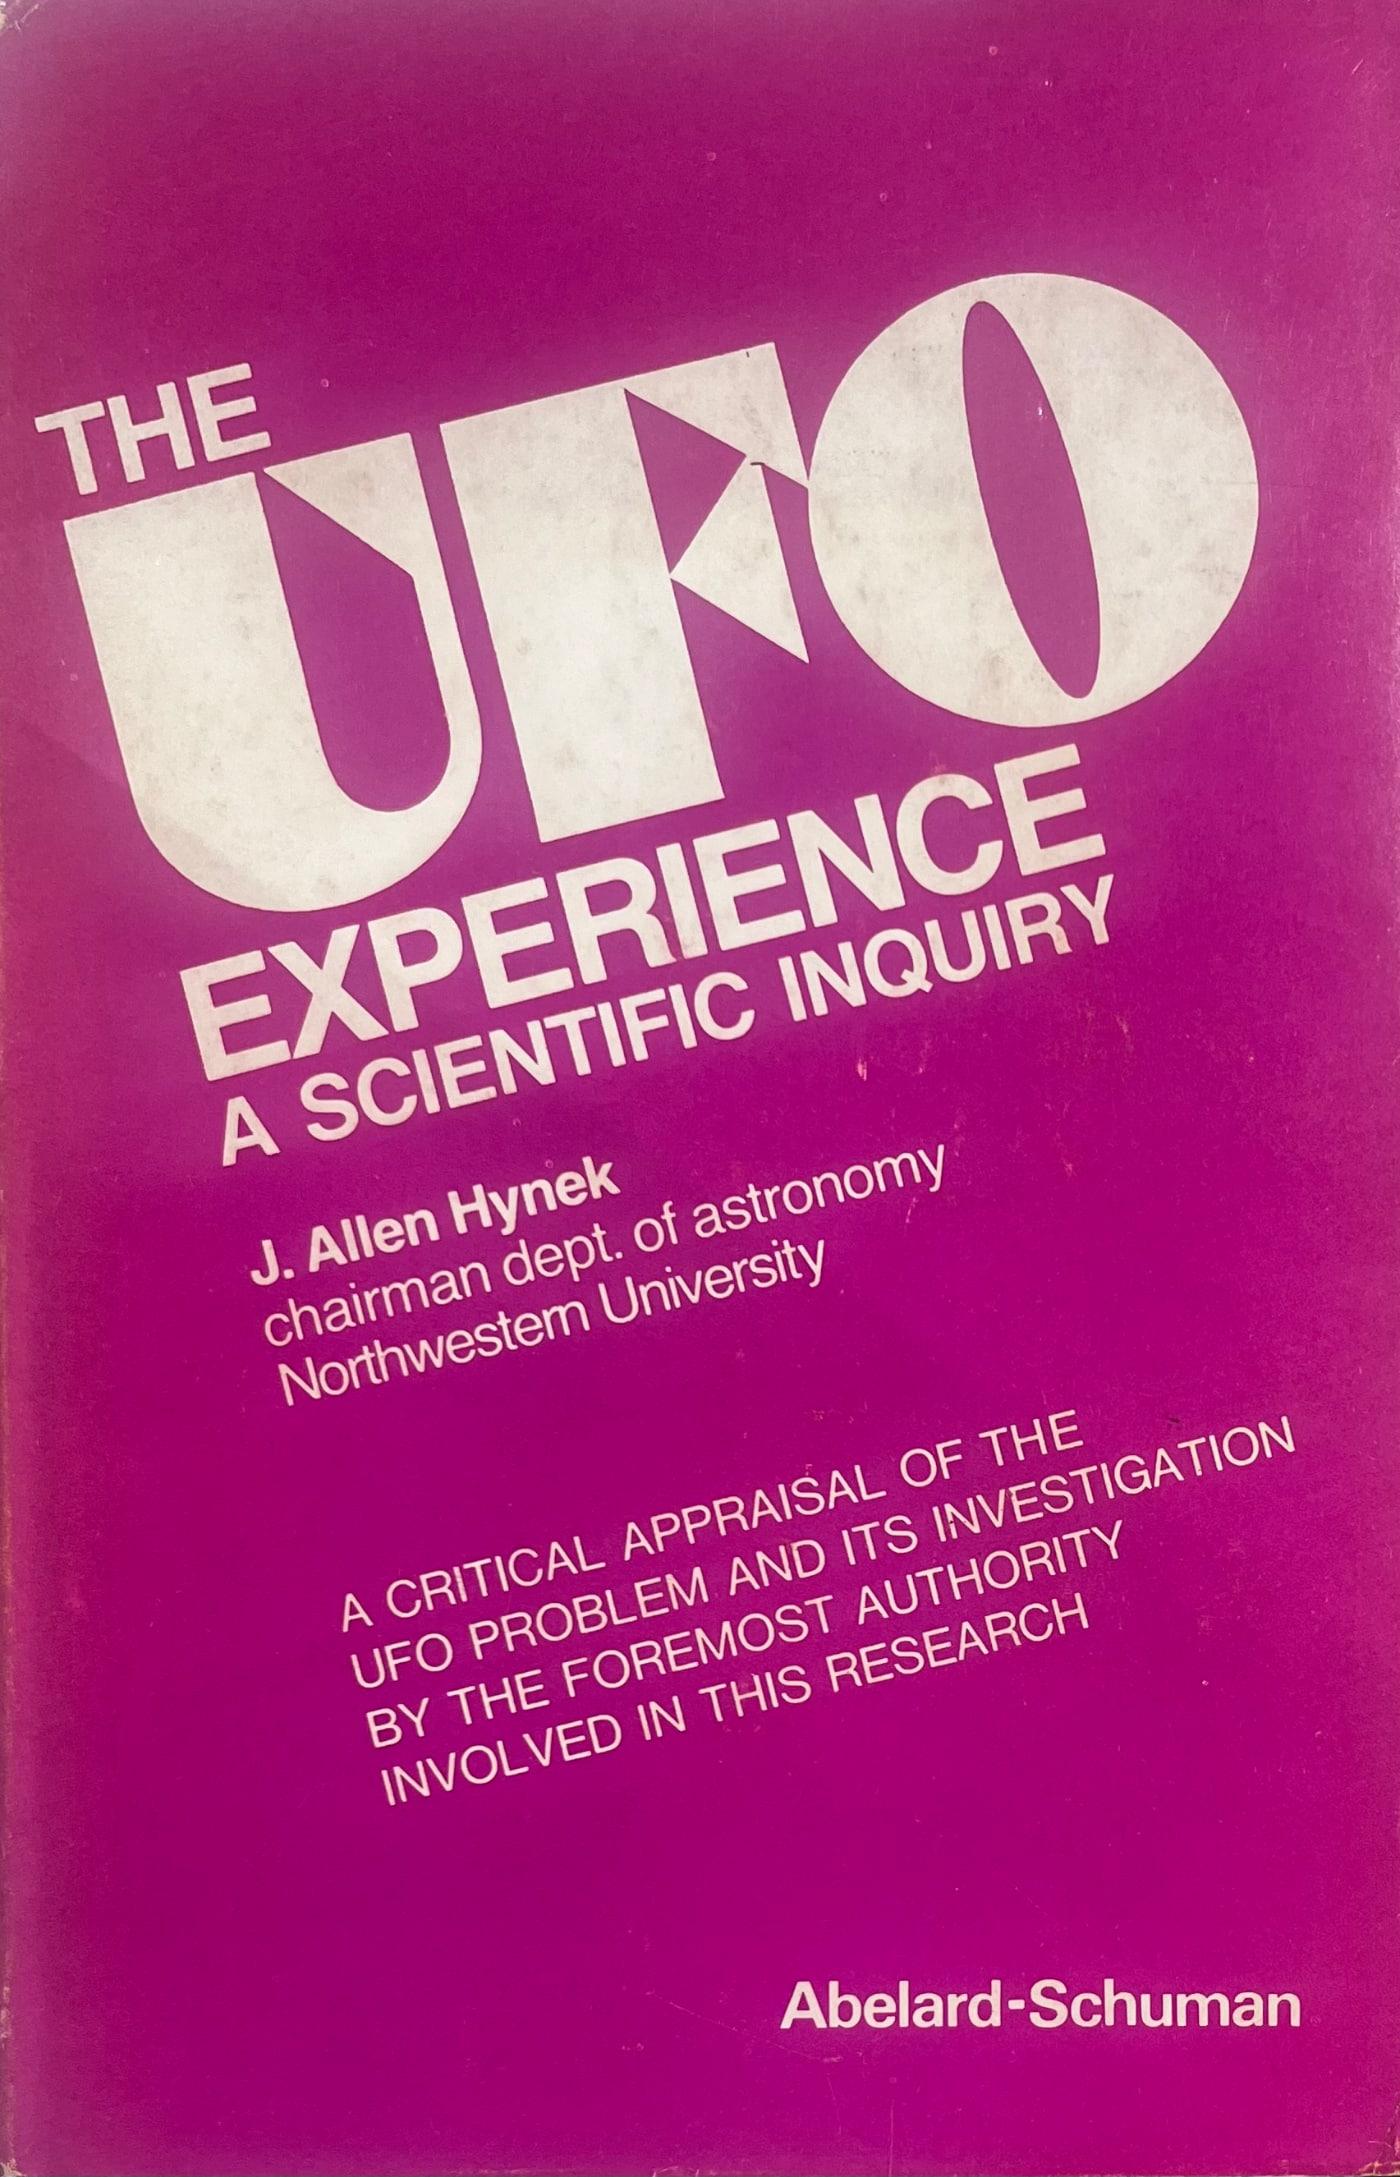 'The ufo experience', de Joseph Allen Hynek.